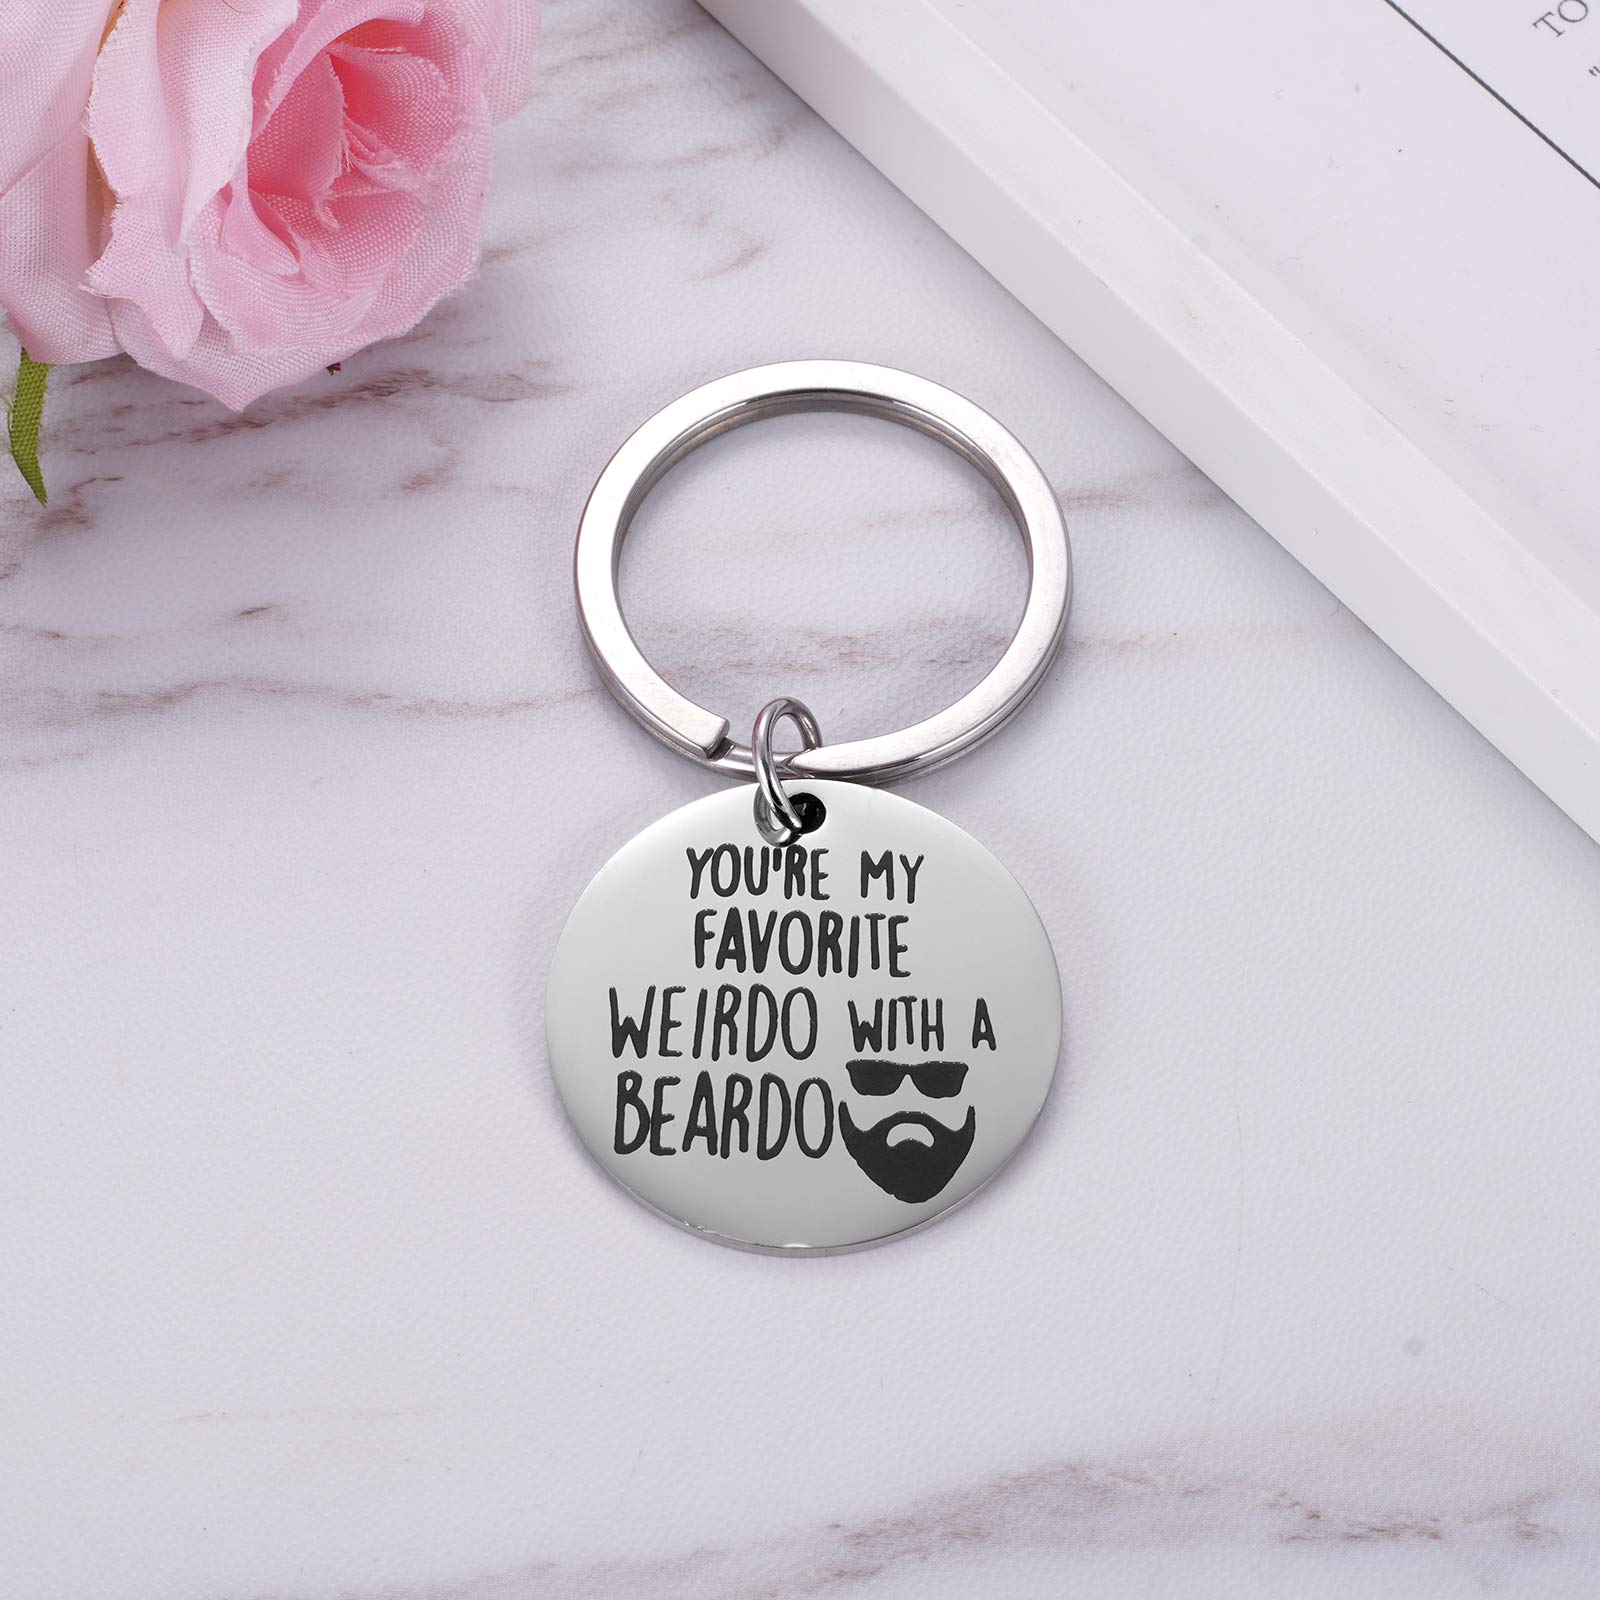 Ukodnus You're My Favorite Weirdo Keychain - Funny Valentine's Day Gifts for Boyfriend Husband - Anniversary Birthday Gift for Him